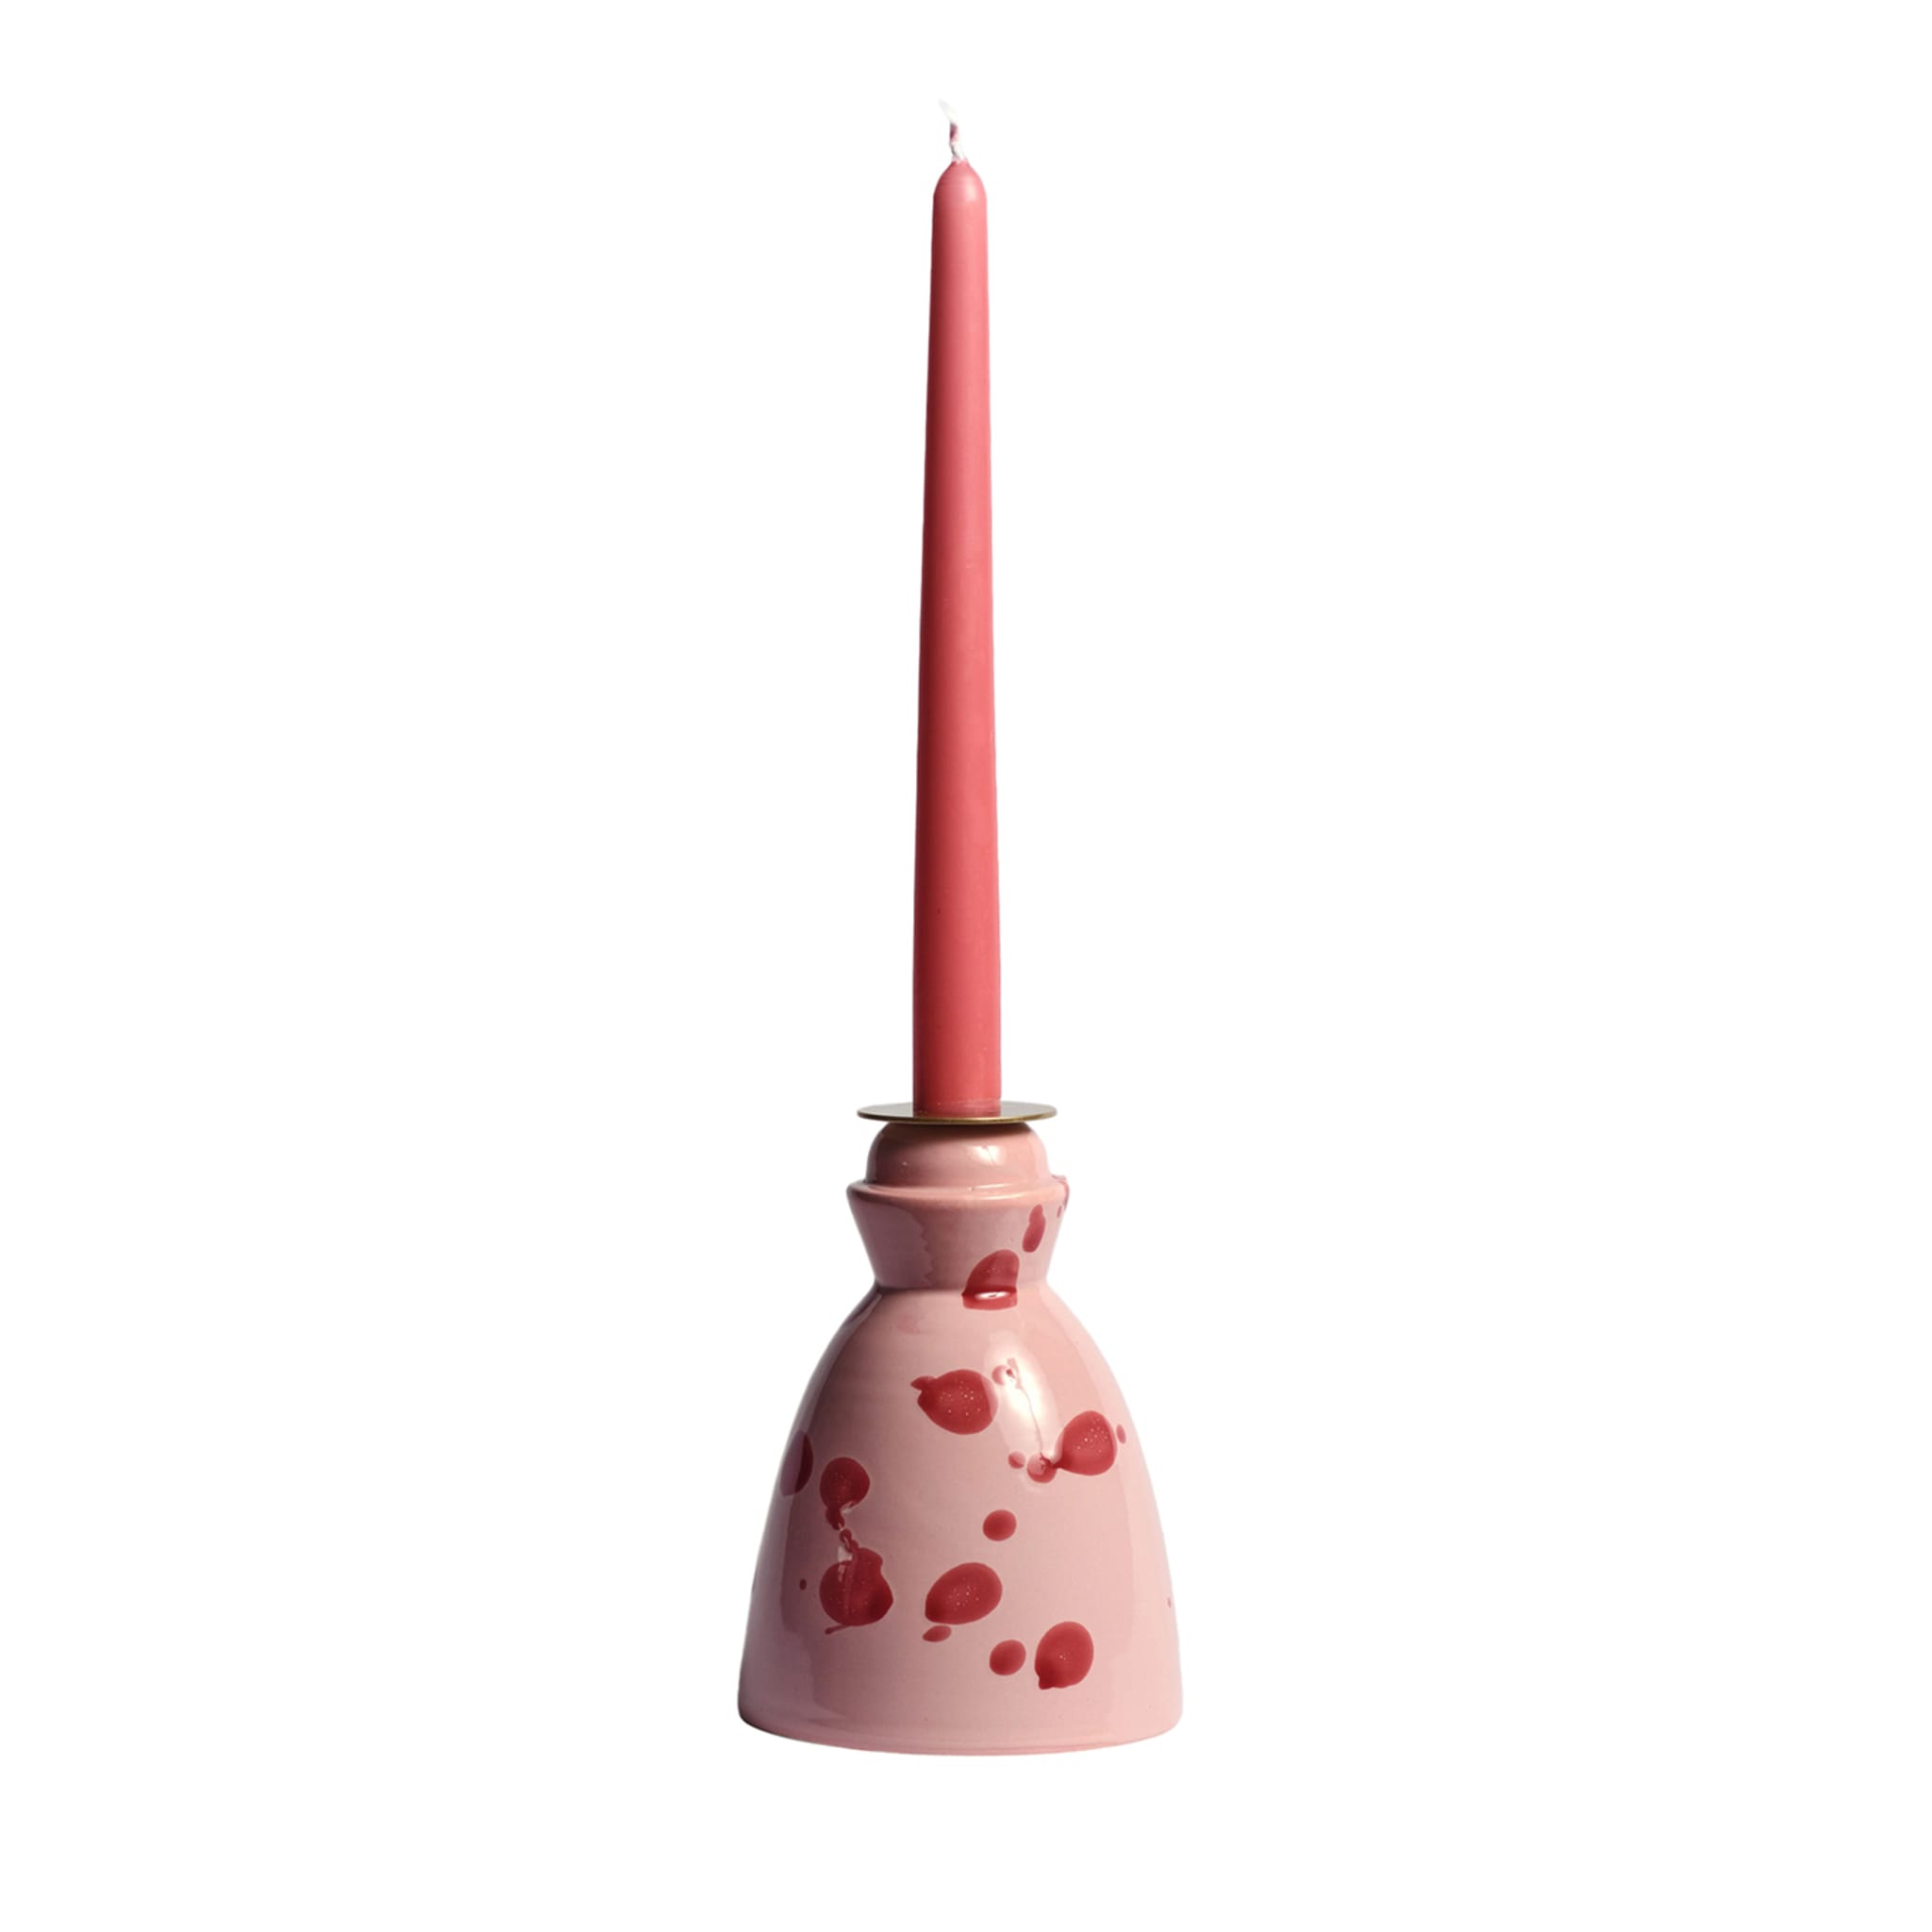 Candeliere in ceramica rosa con 4 candele di cera d'api - Vista principale